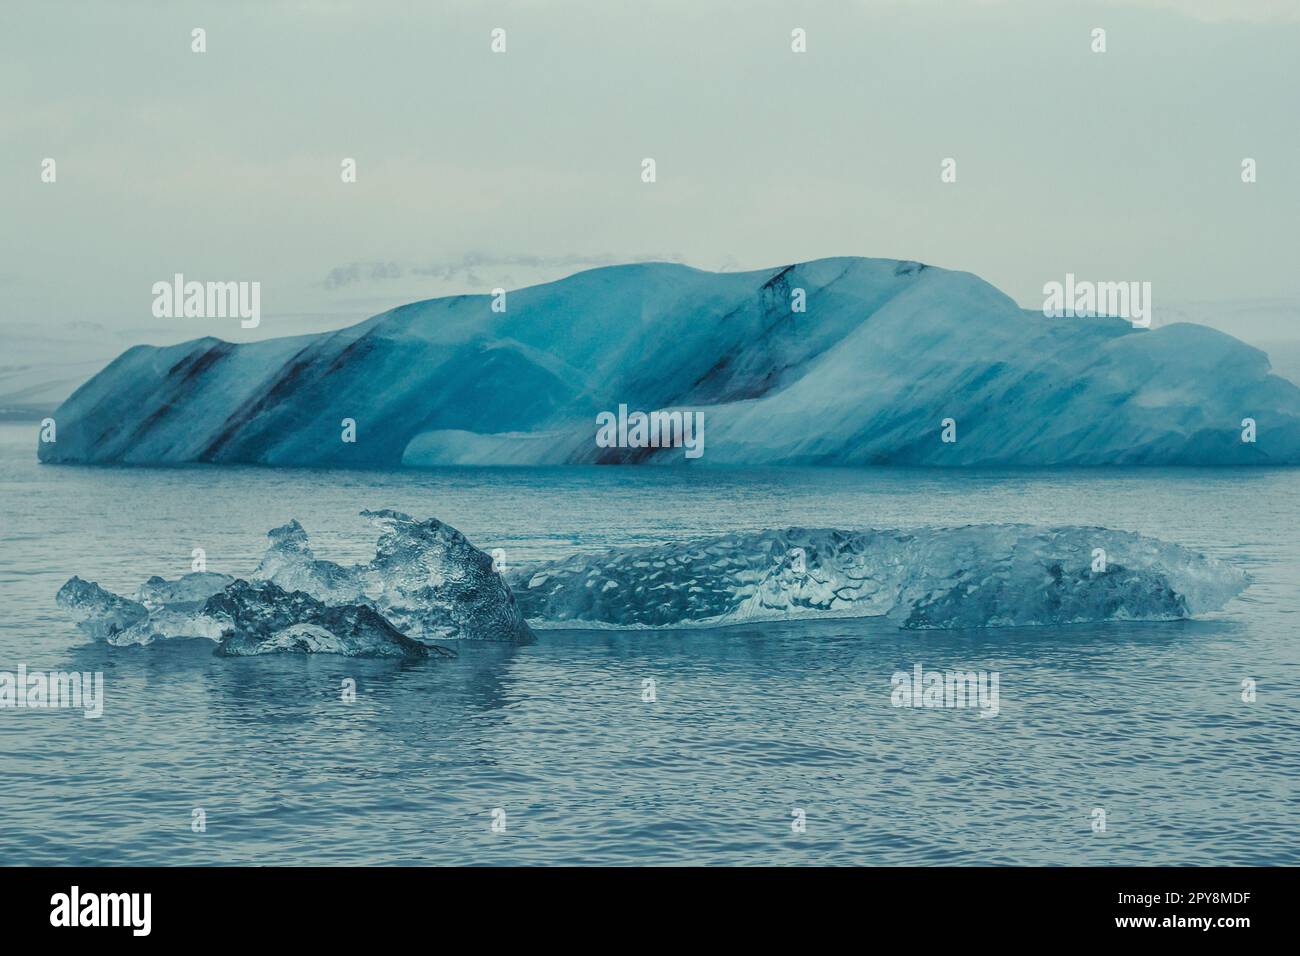 Riesige Eisberge in Meereslandschaft Foto Stockfoto